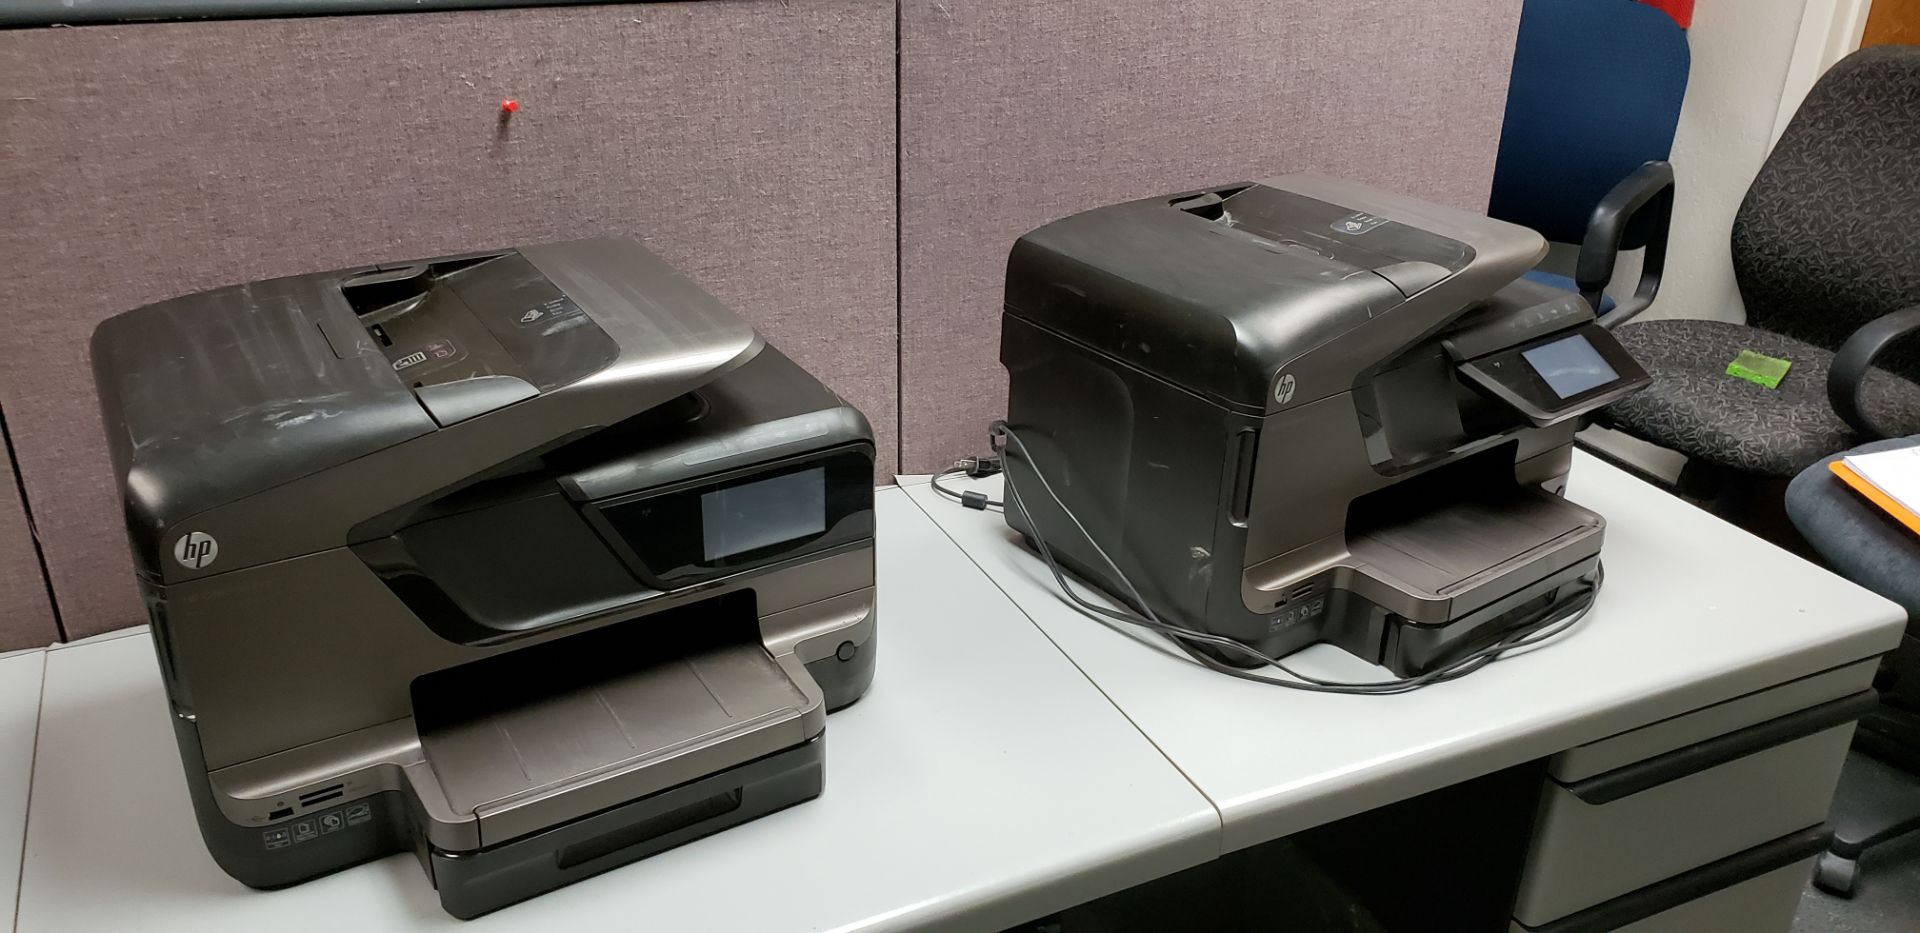 HP Officejet Pro 8600 Plus, (Print, fax copy, scan, web) - Image 3 of 3